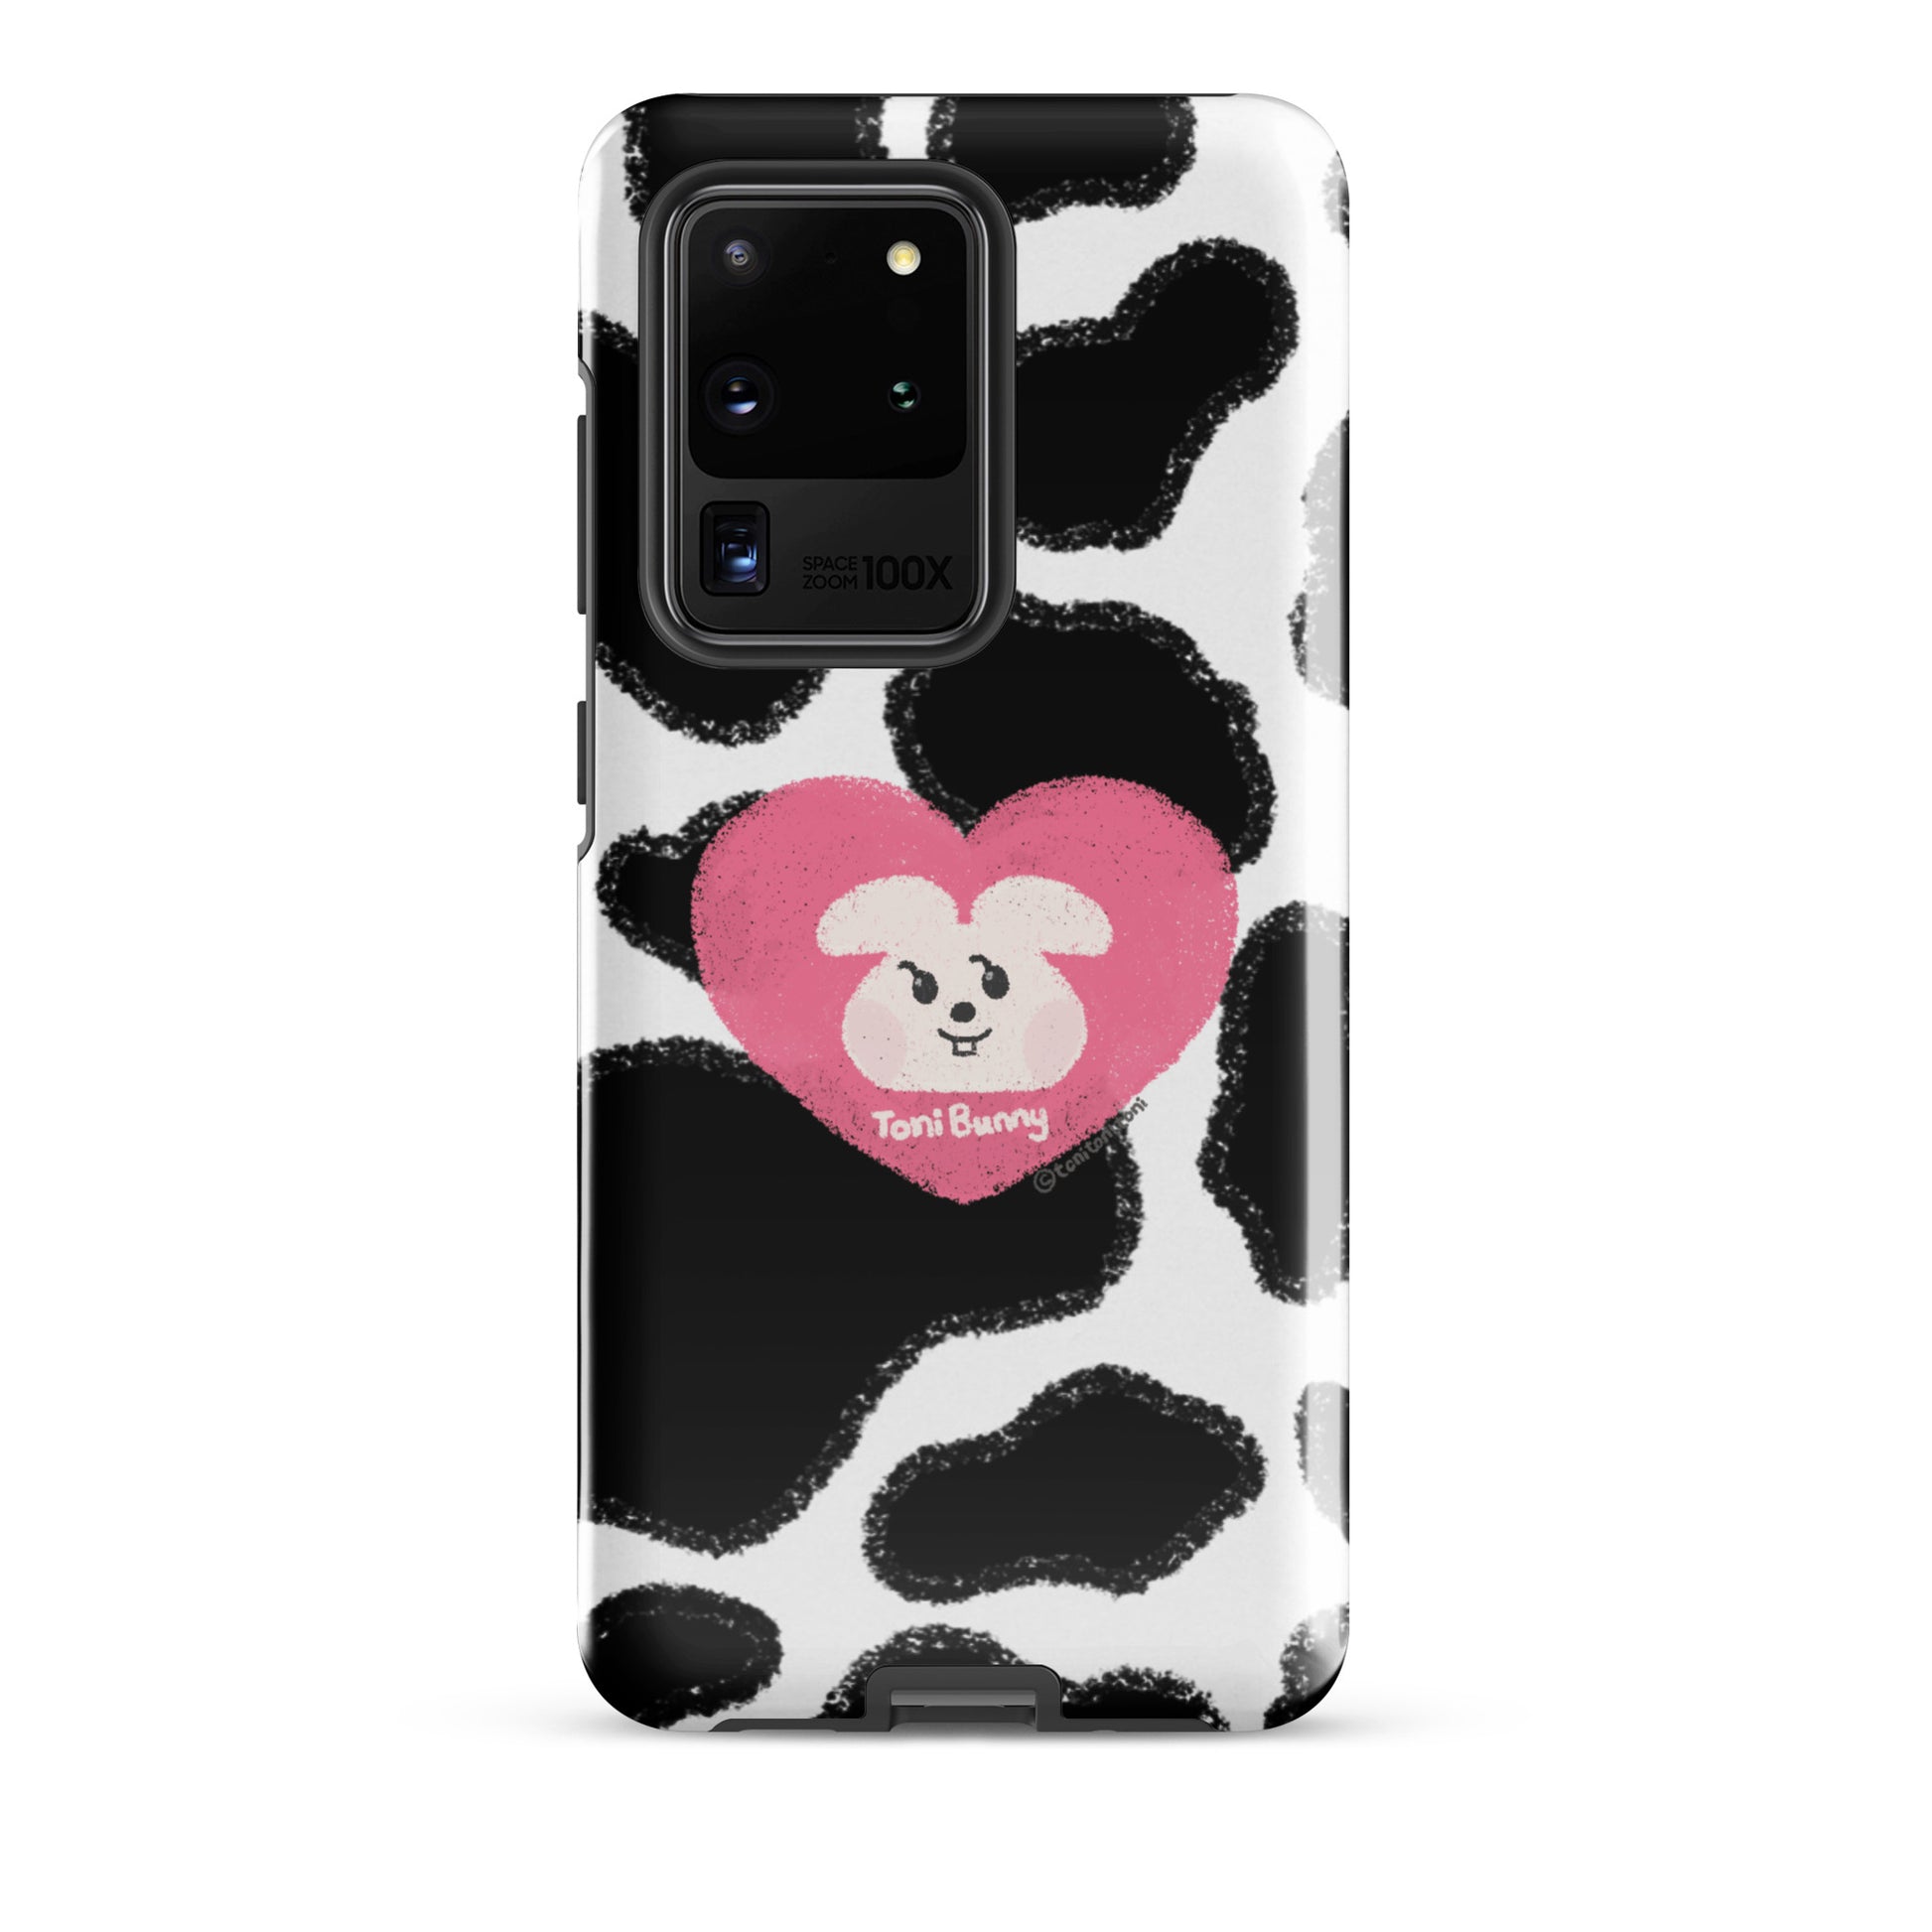 Cow Print Phone Cases